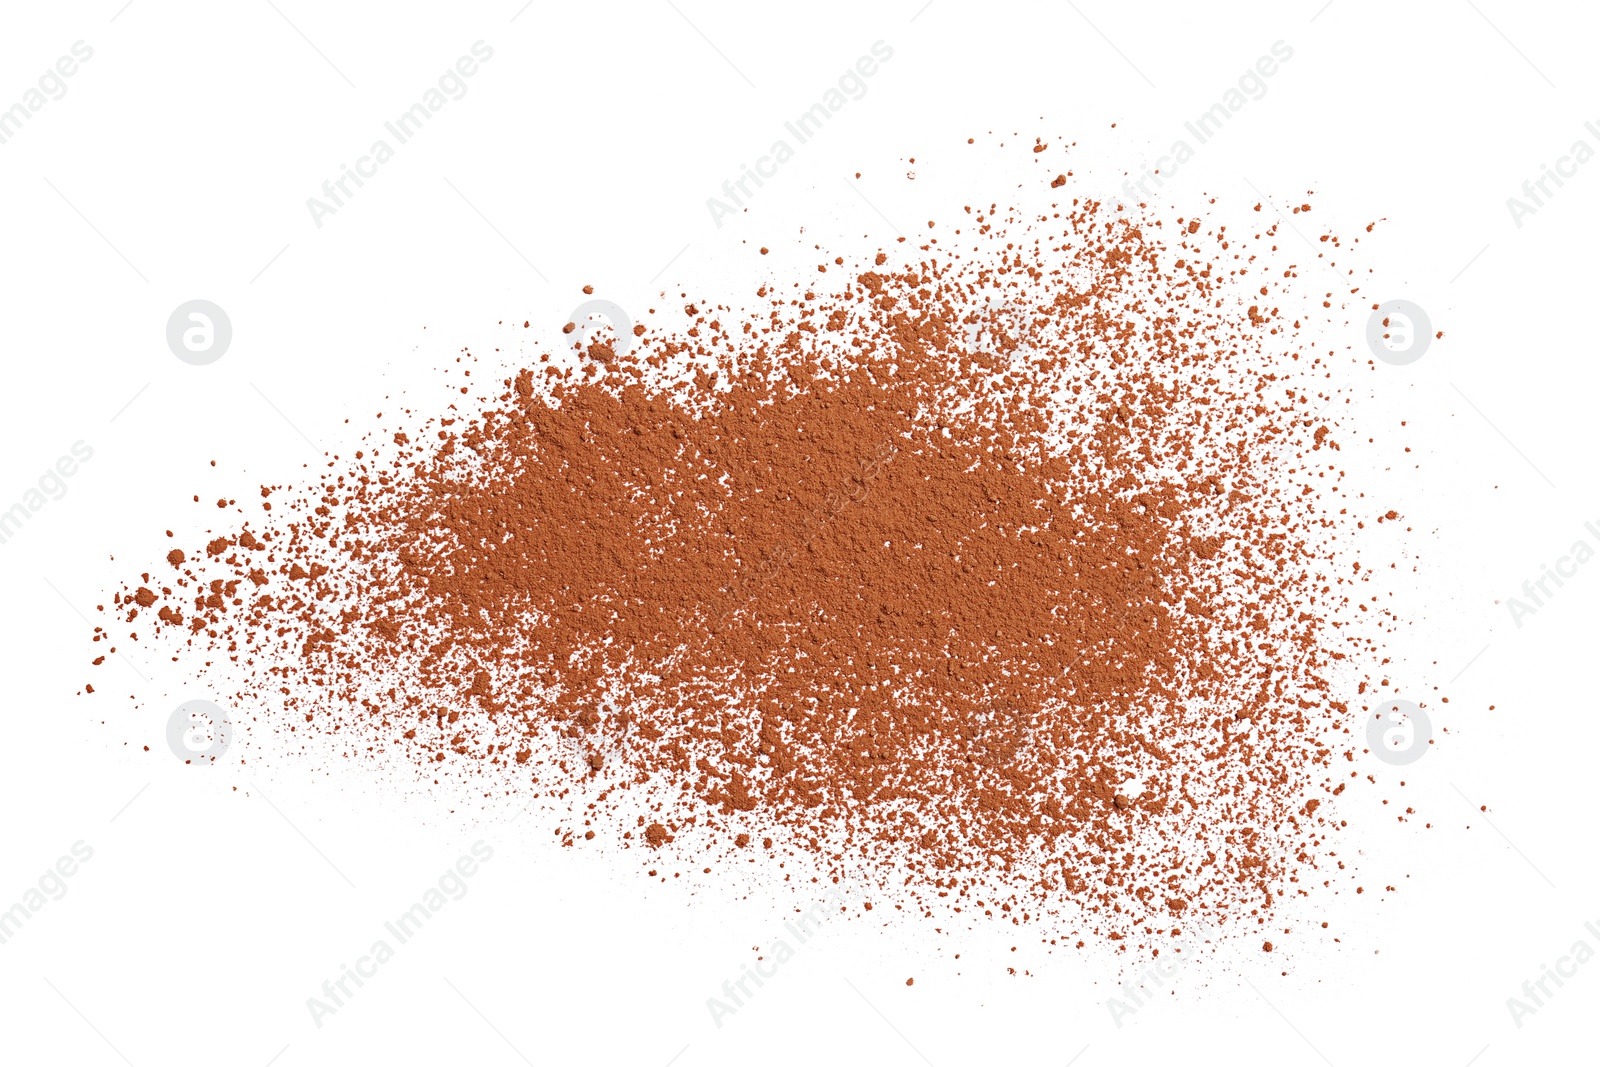 Photo of Cocoa powder on white background